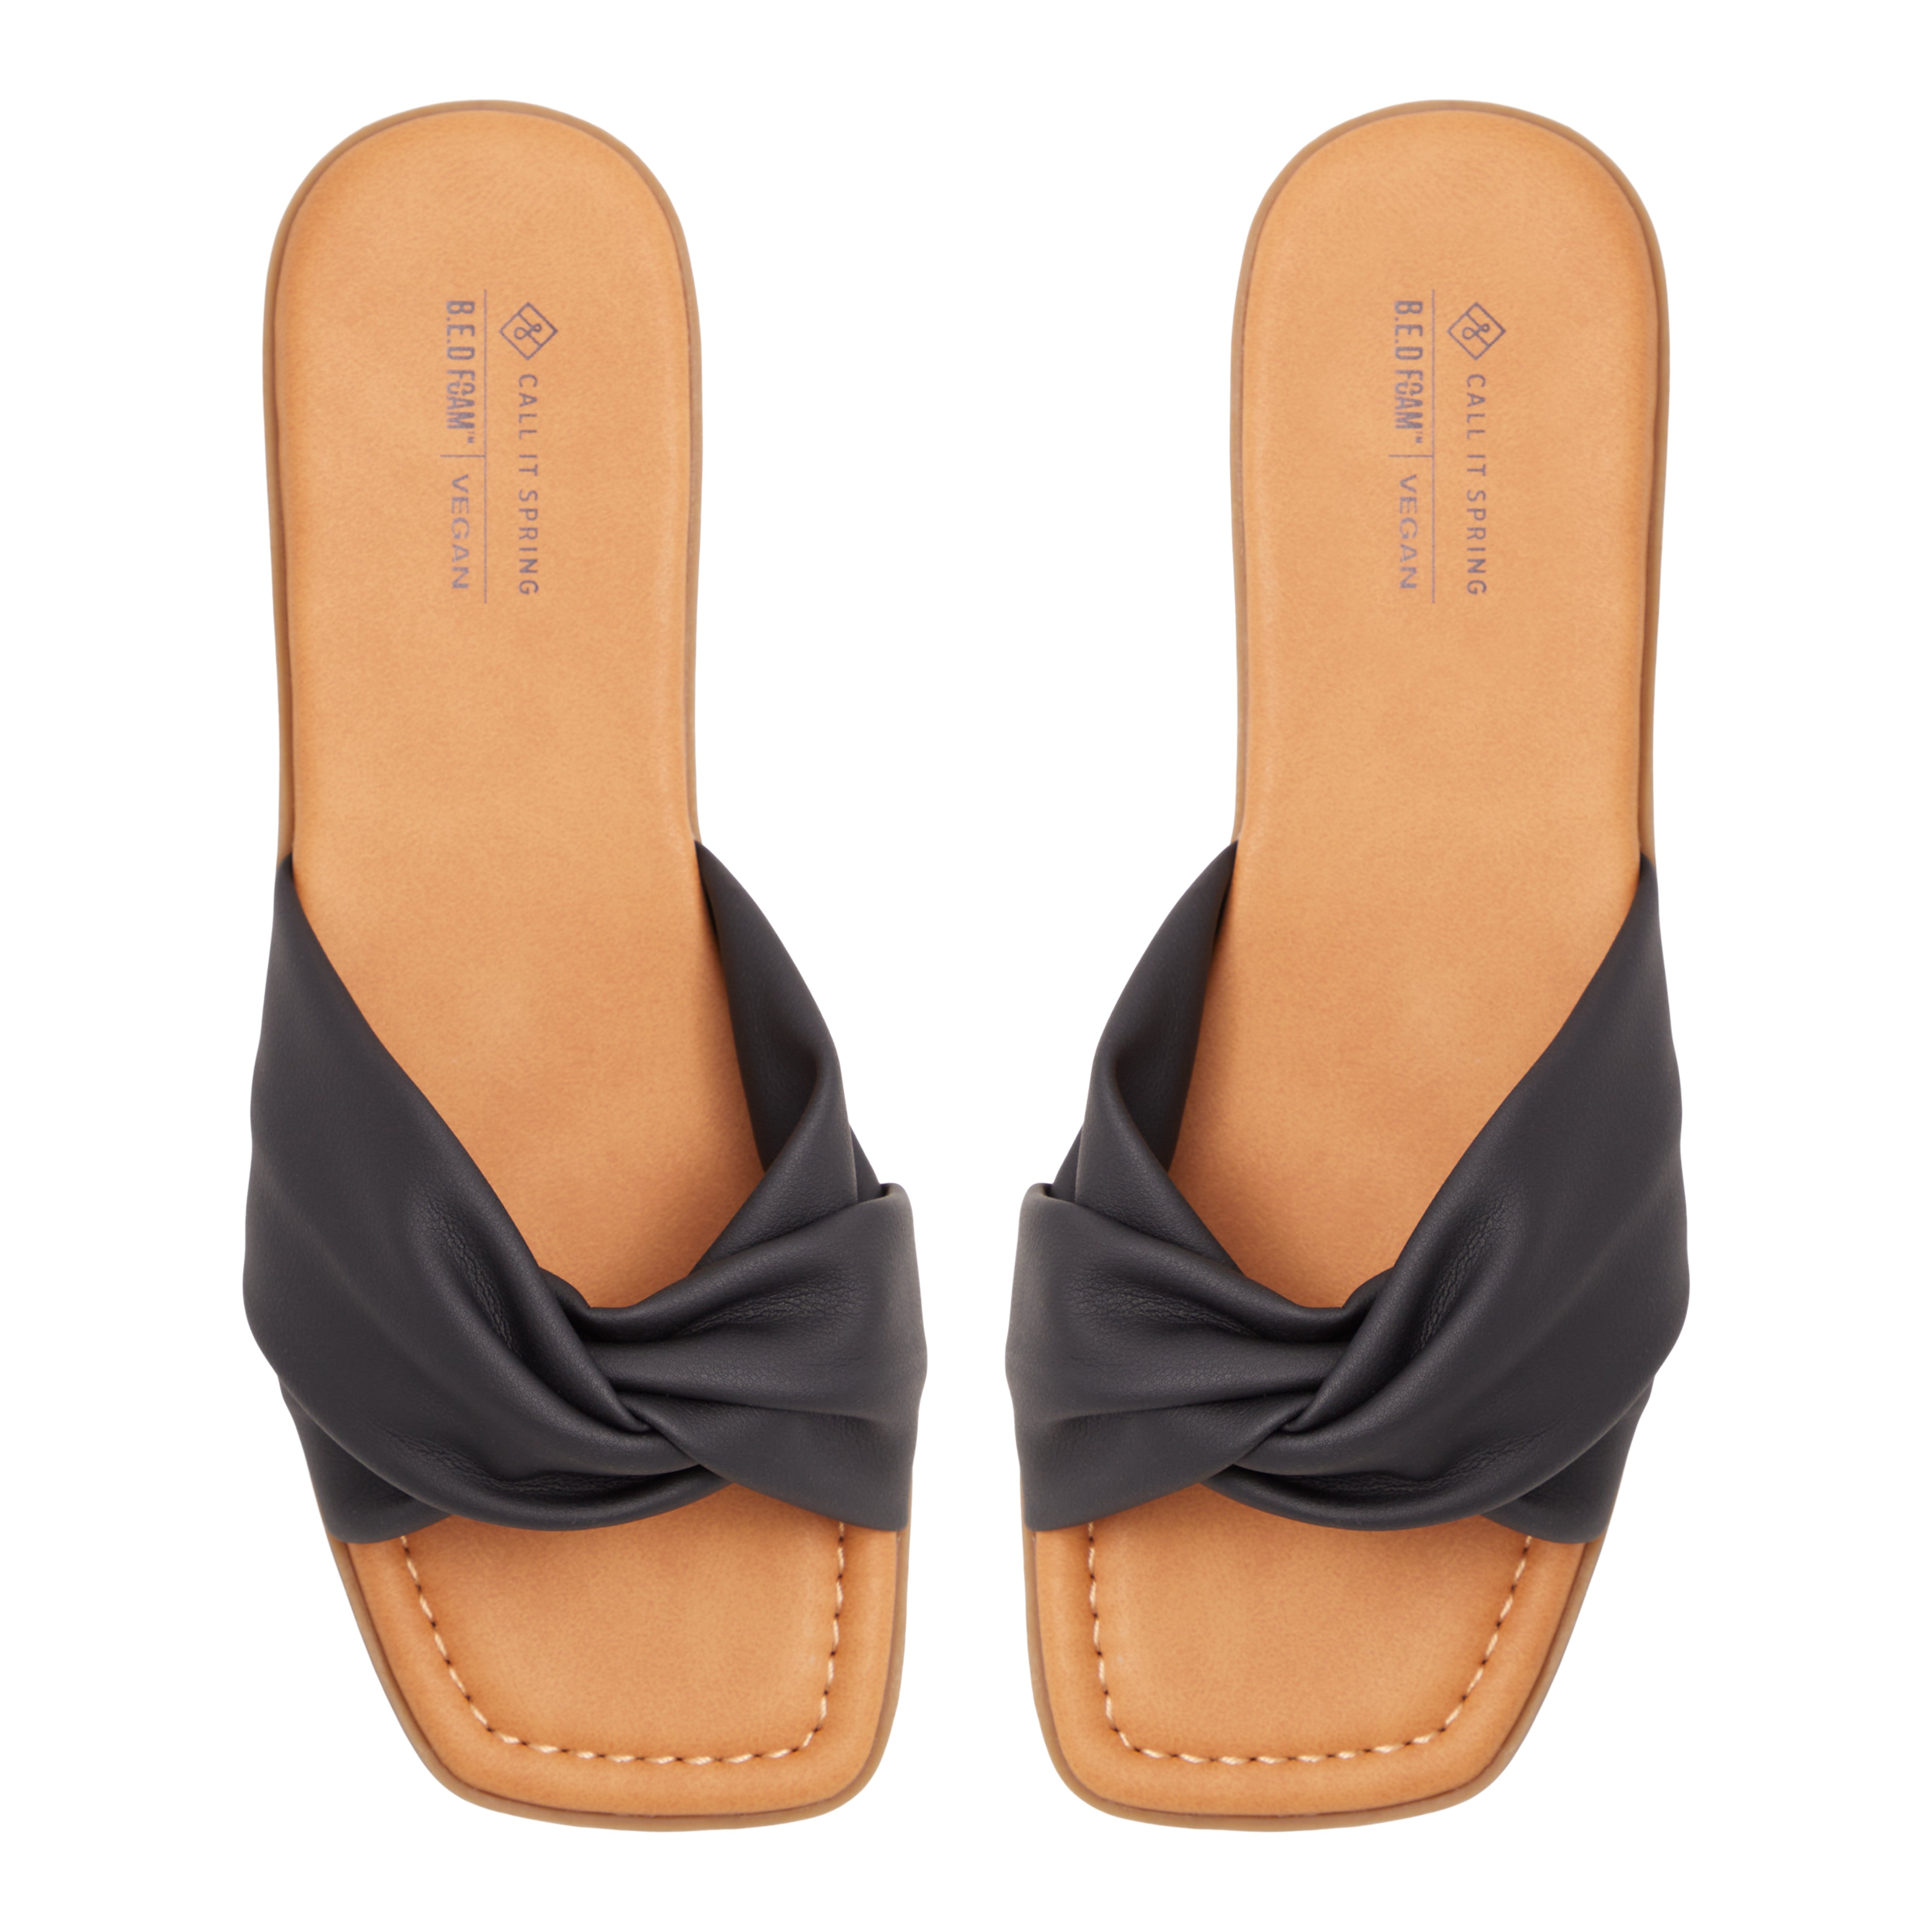 Peaches Women's Black Flat Sandals image number 1